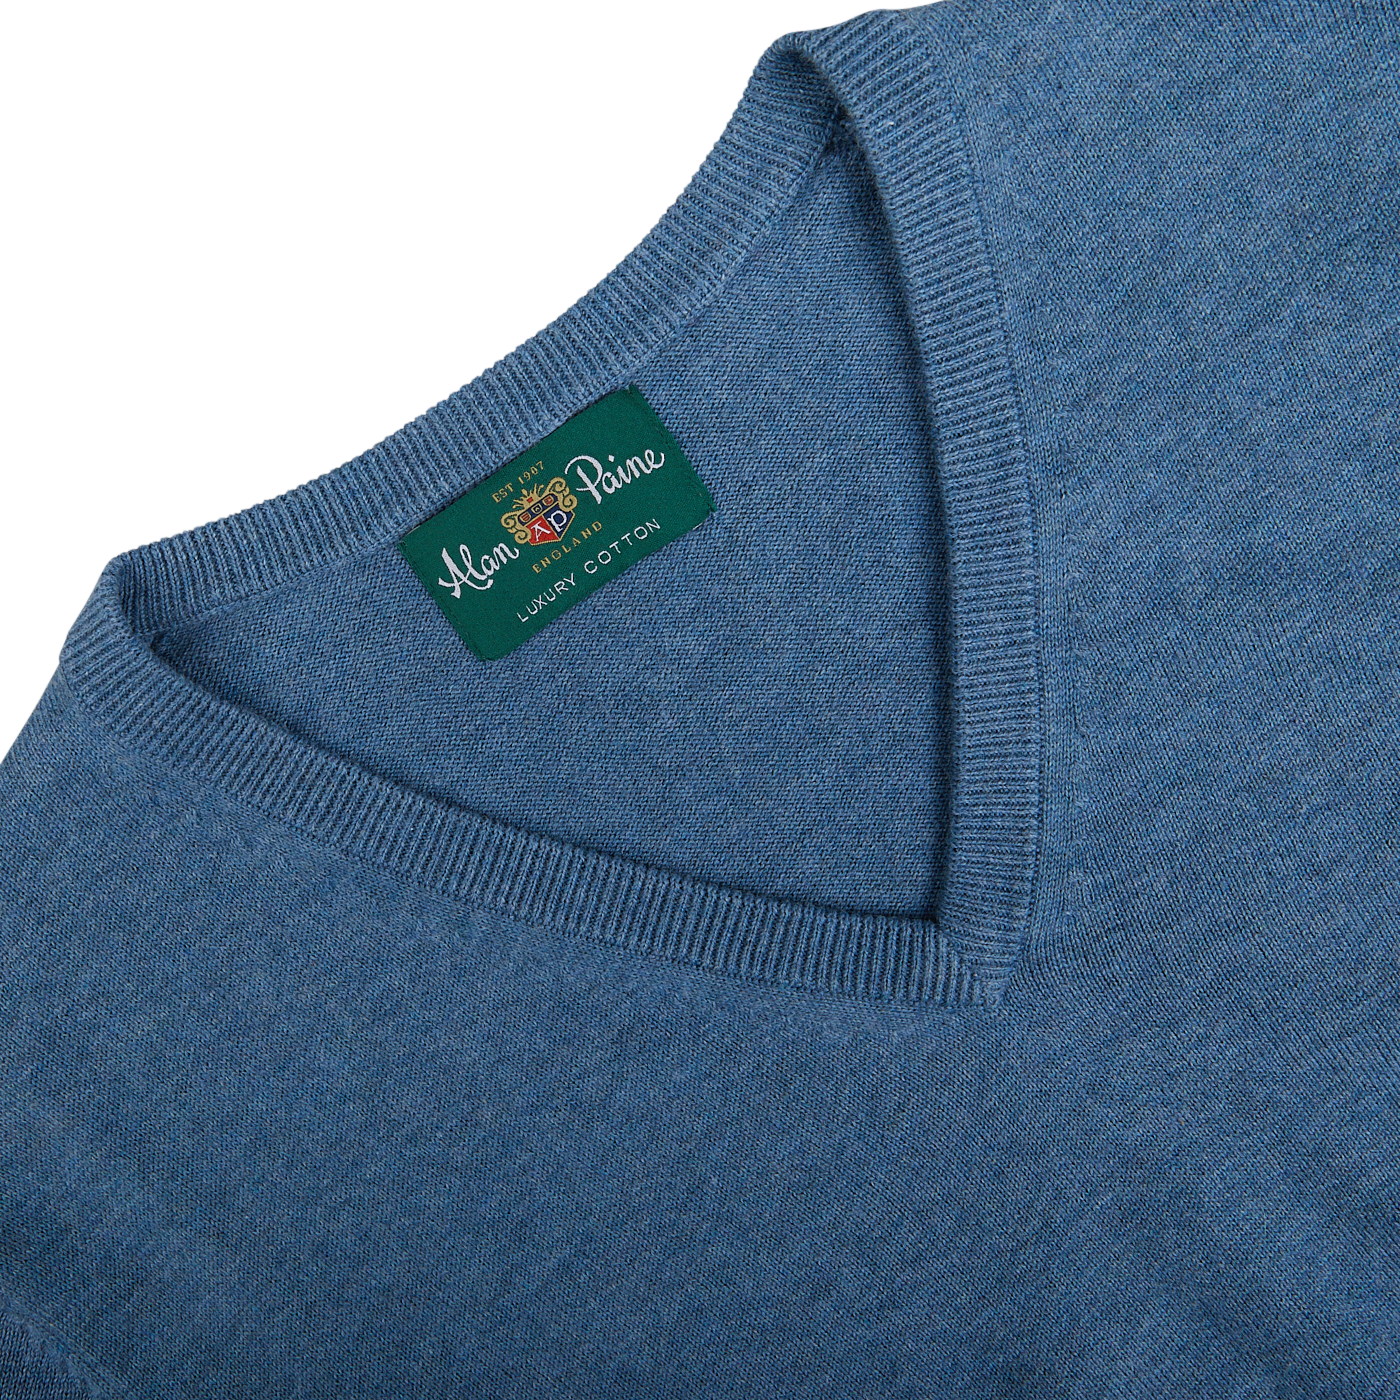 Close-up of a blue garment label reading "Alan Paine, 100% luxury cotton cashmere.